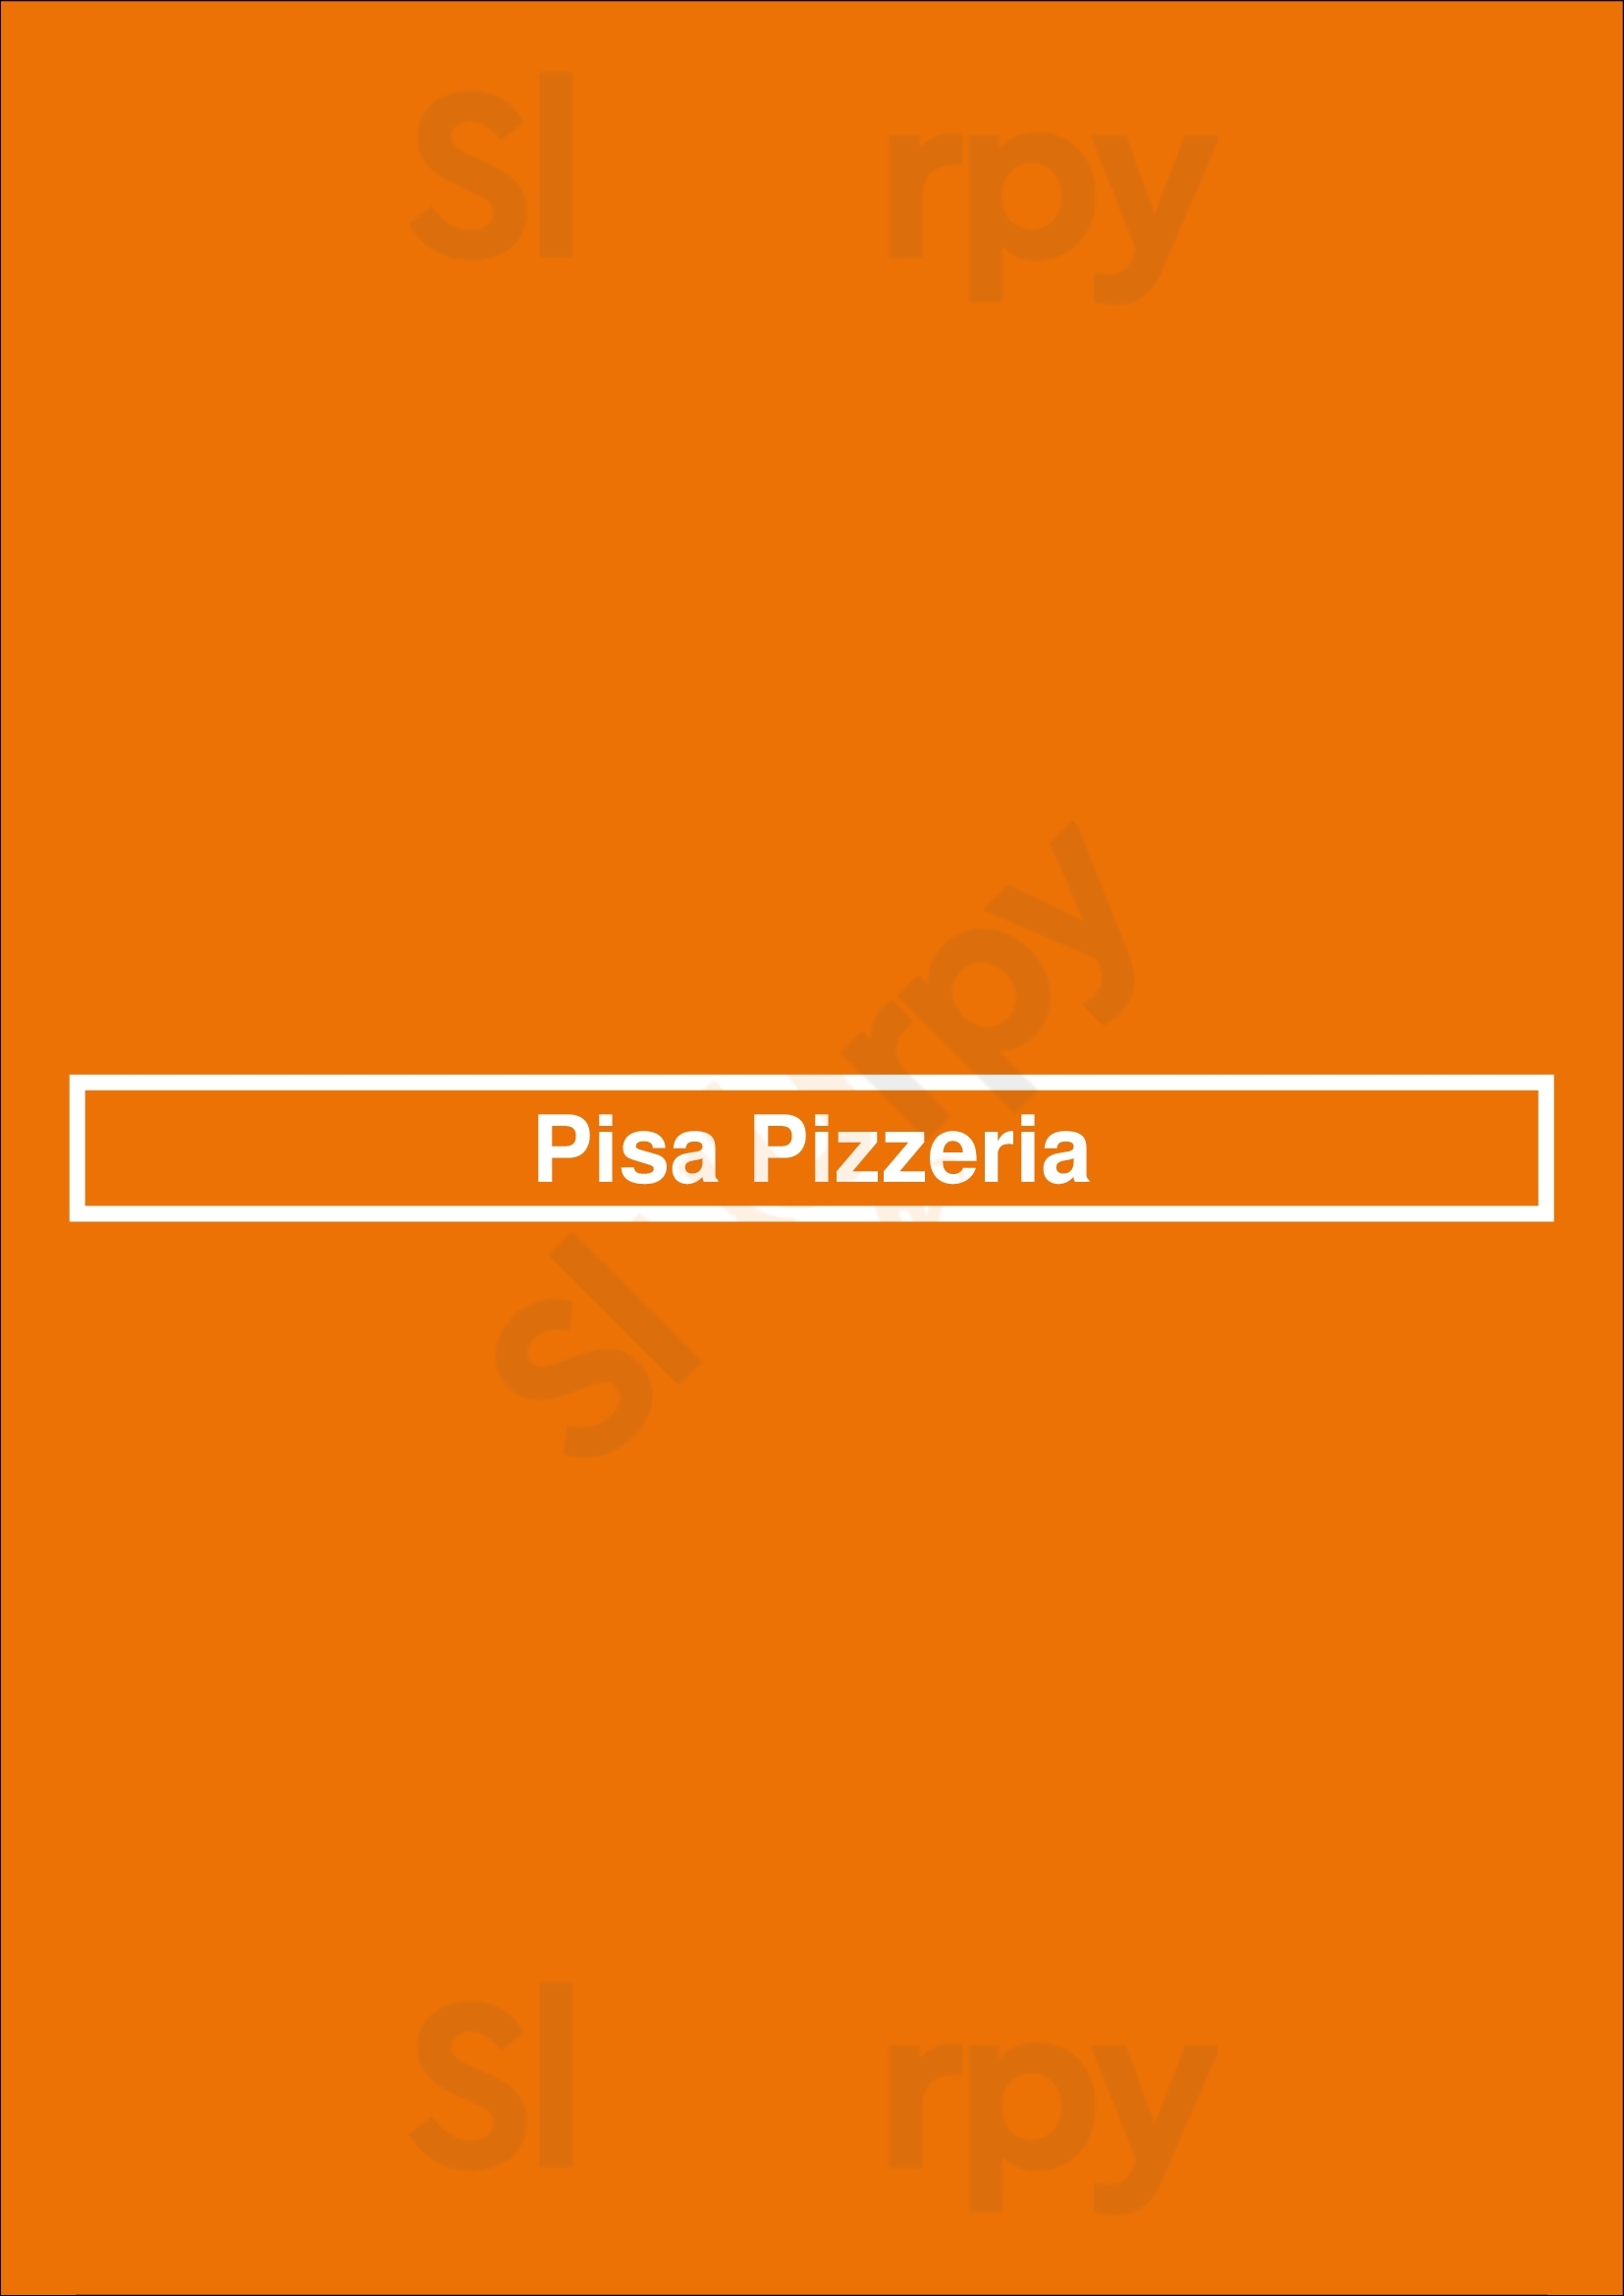 Pisa Pizzeria Kitchener Menu - 1